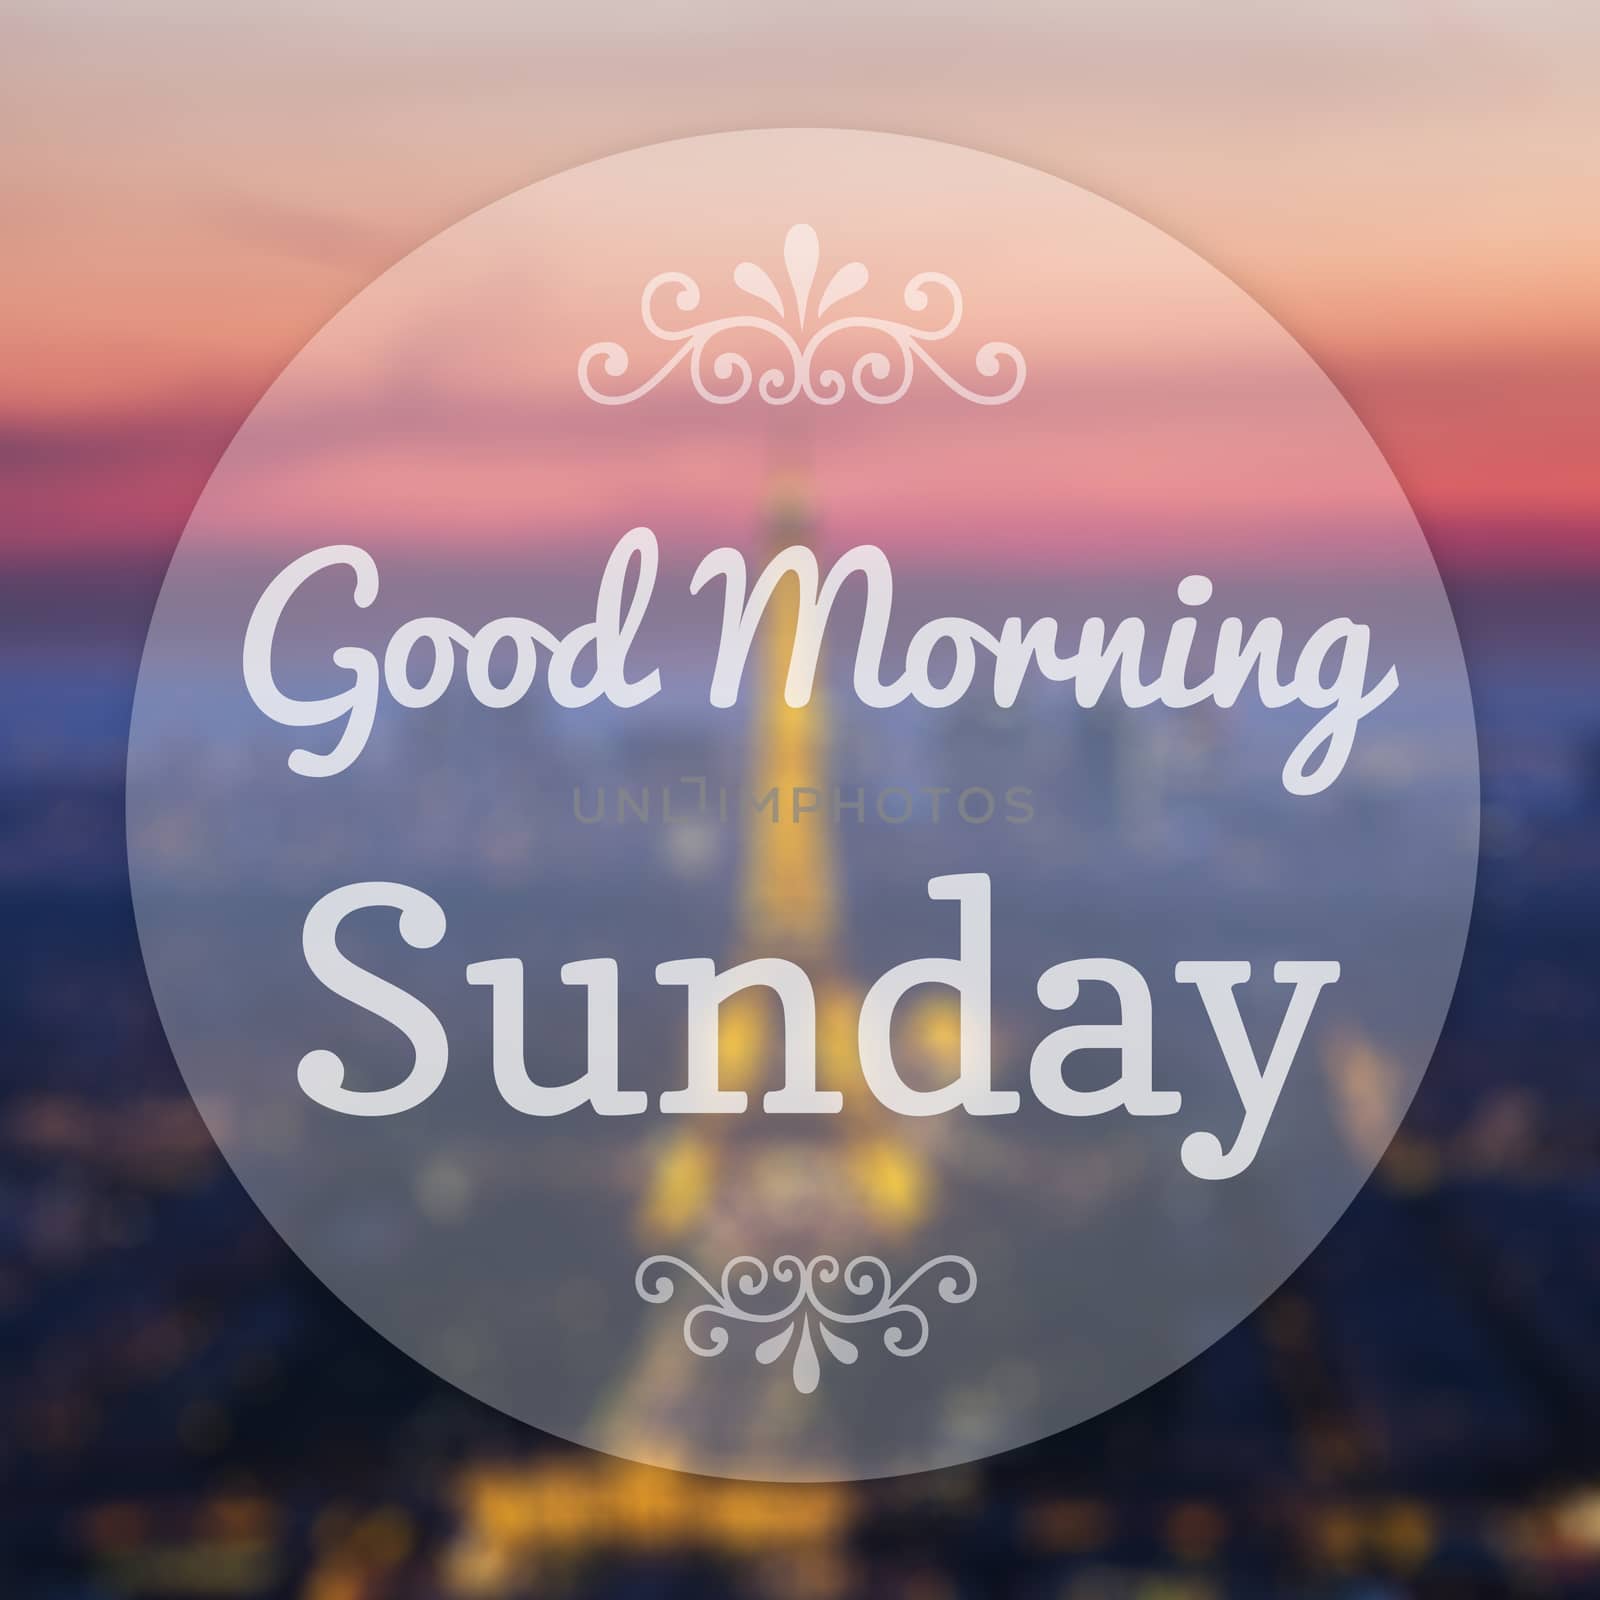 Good Morning Sunday on Eiffle Paris blur background by 2nix